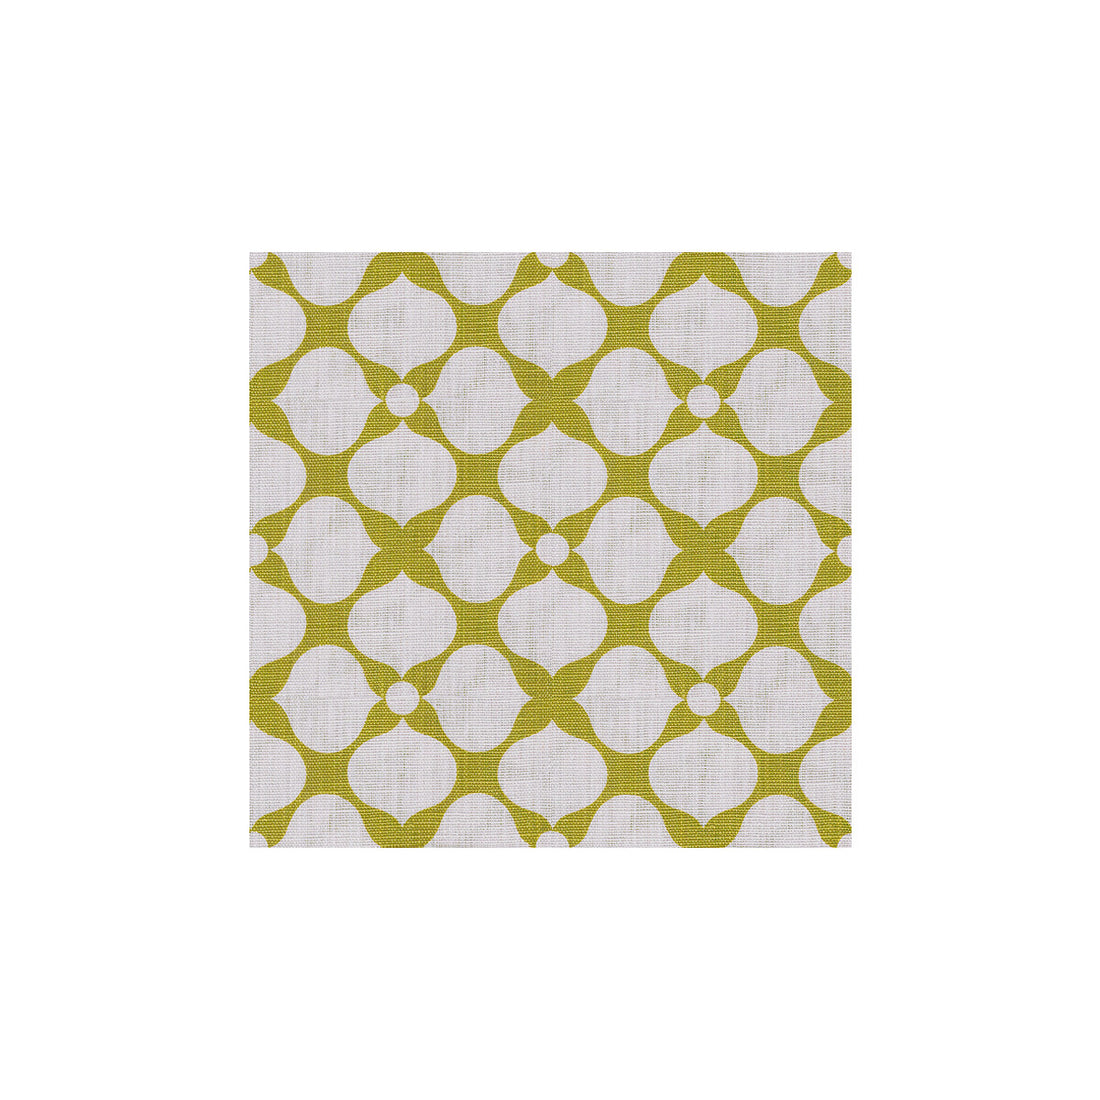 Santa Rosa fabric in pear color - pattern SANTA ROSA.3.0 - by Kravet Basics in the Jonathan Adler Utopia collection